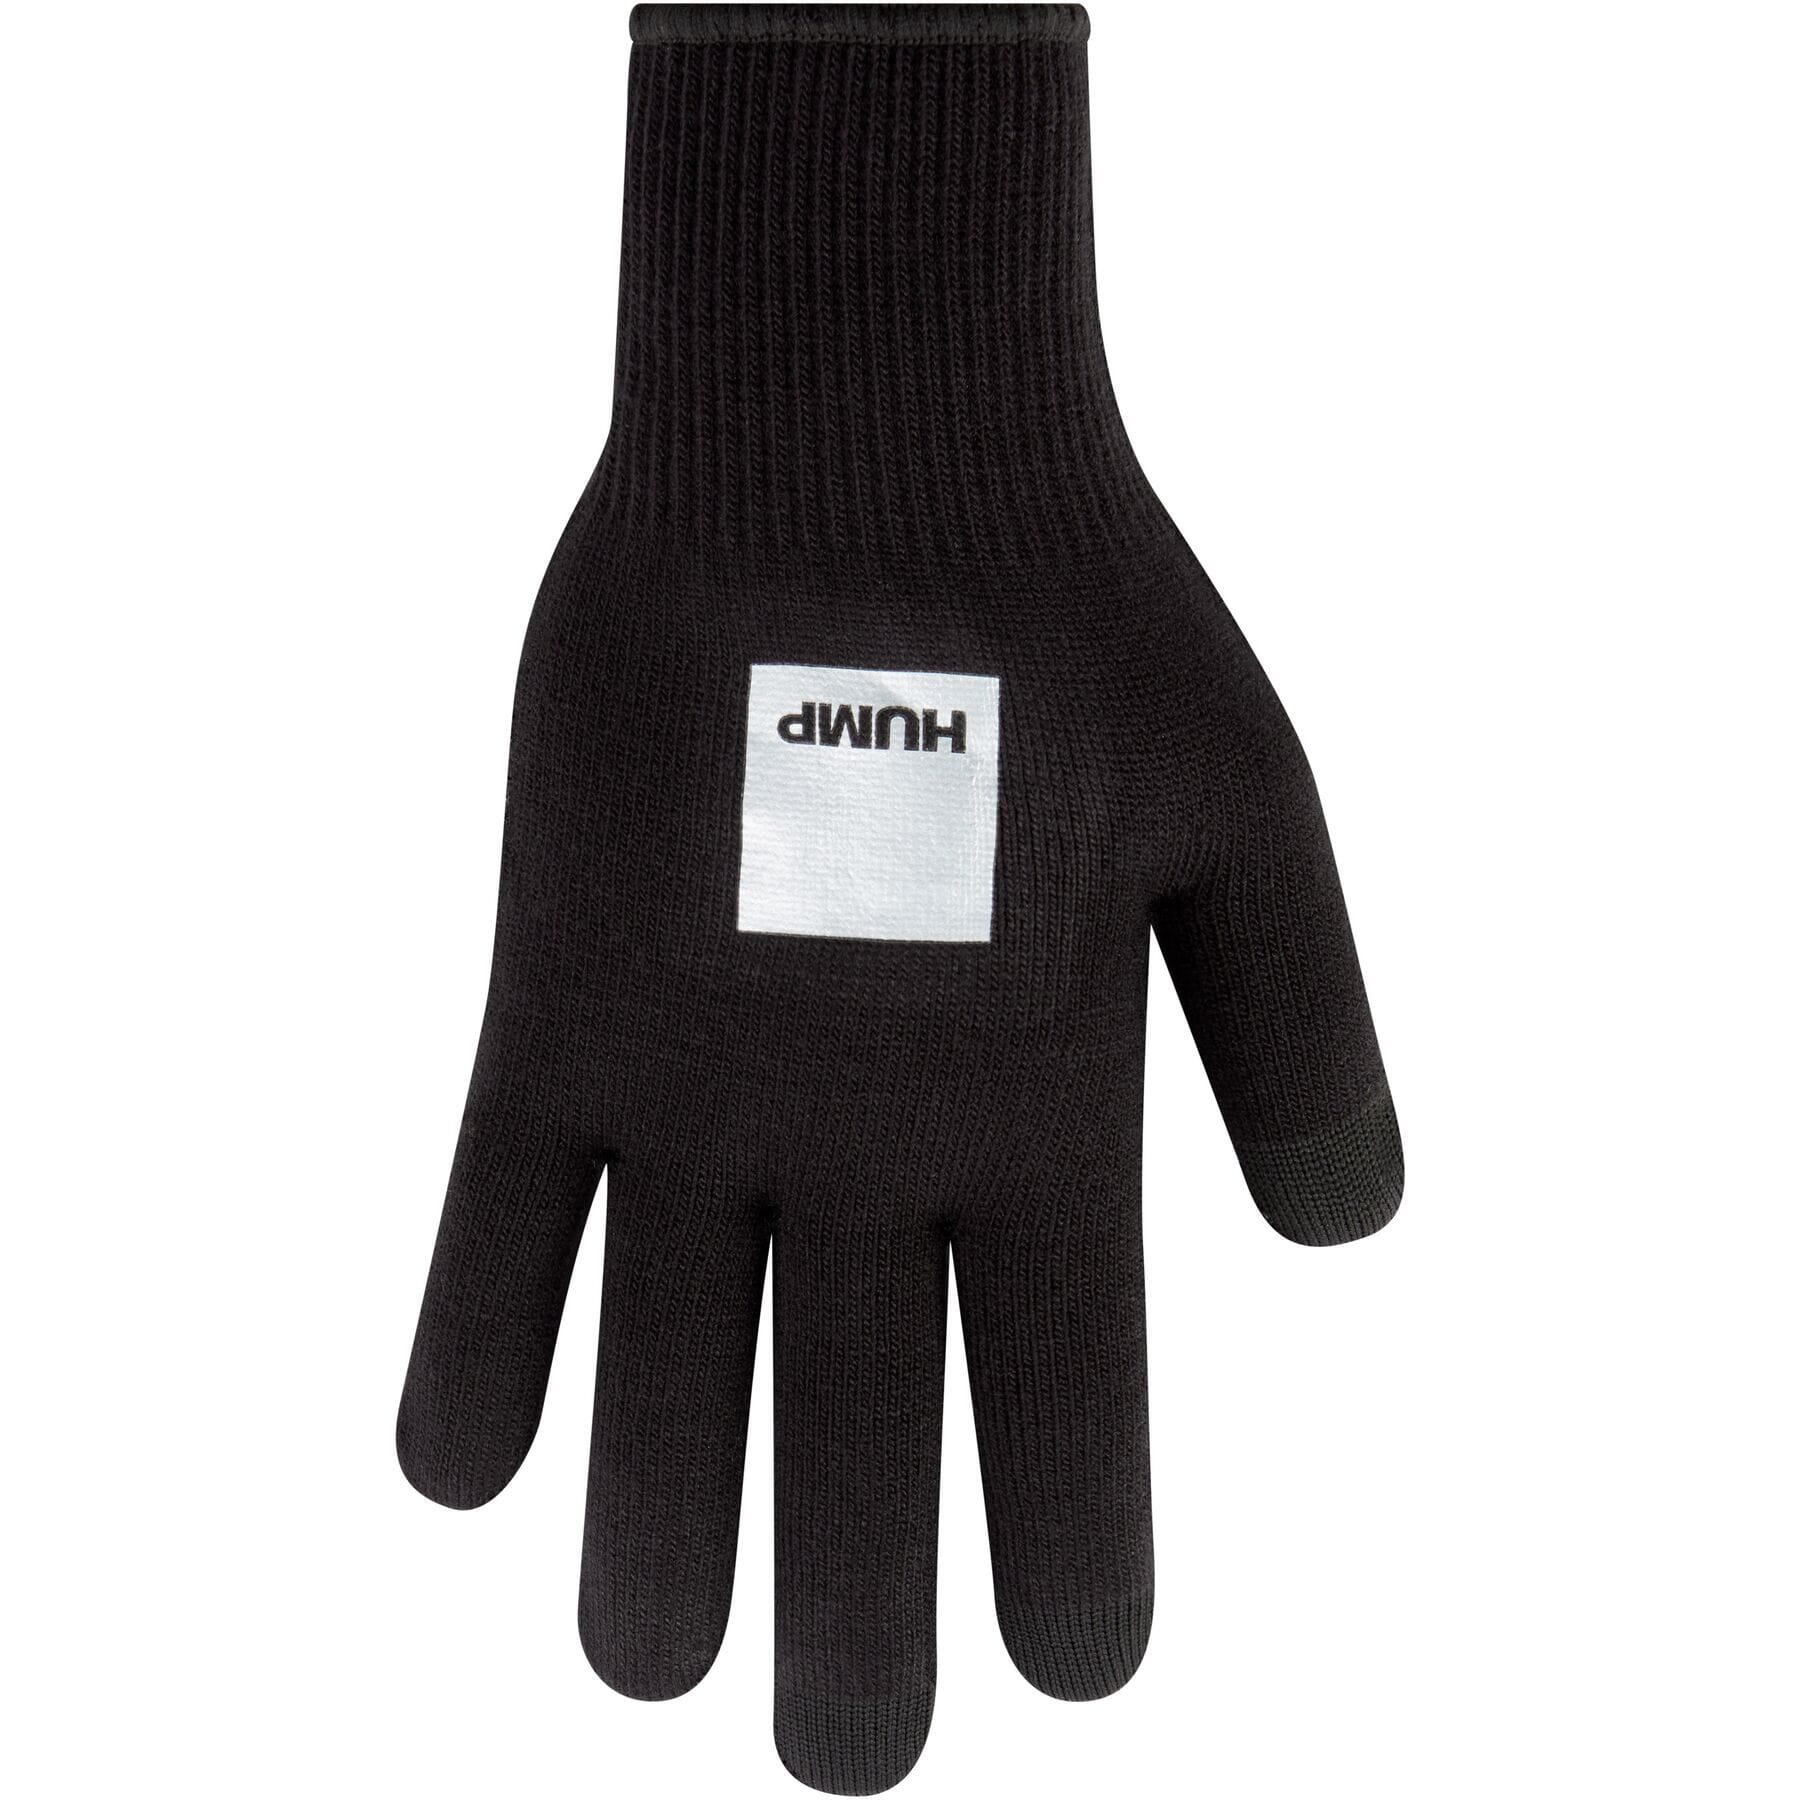 HUMP Pocket Thermal Glove - Black - Medium - Large 1/2